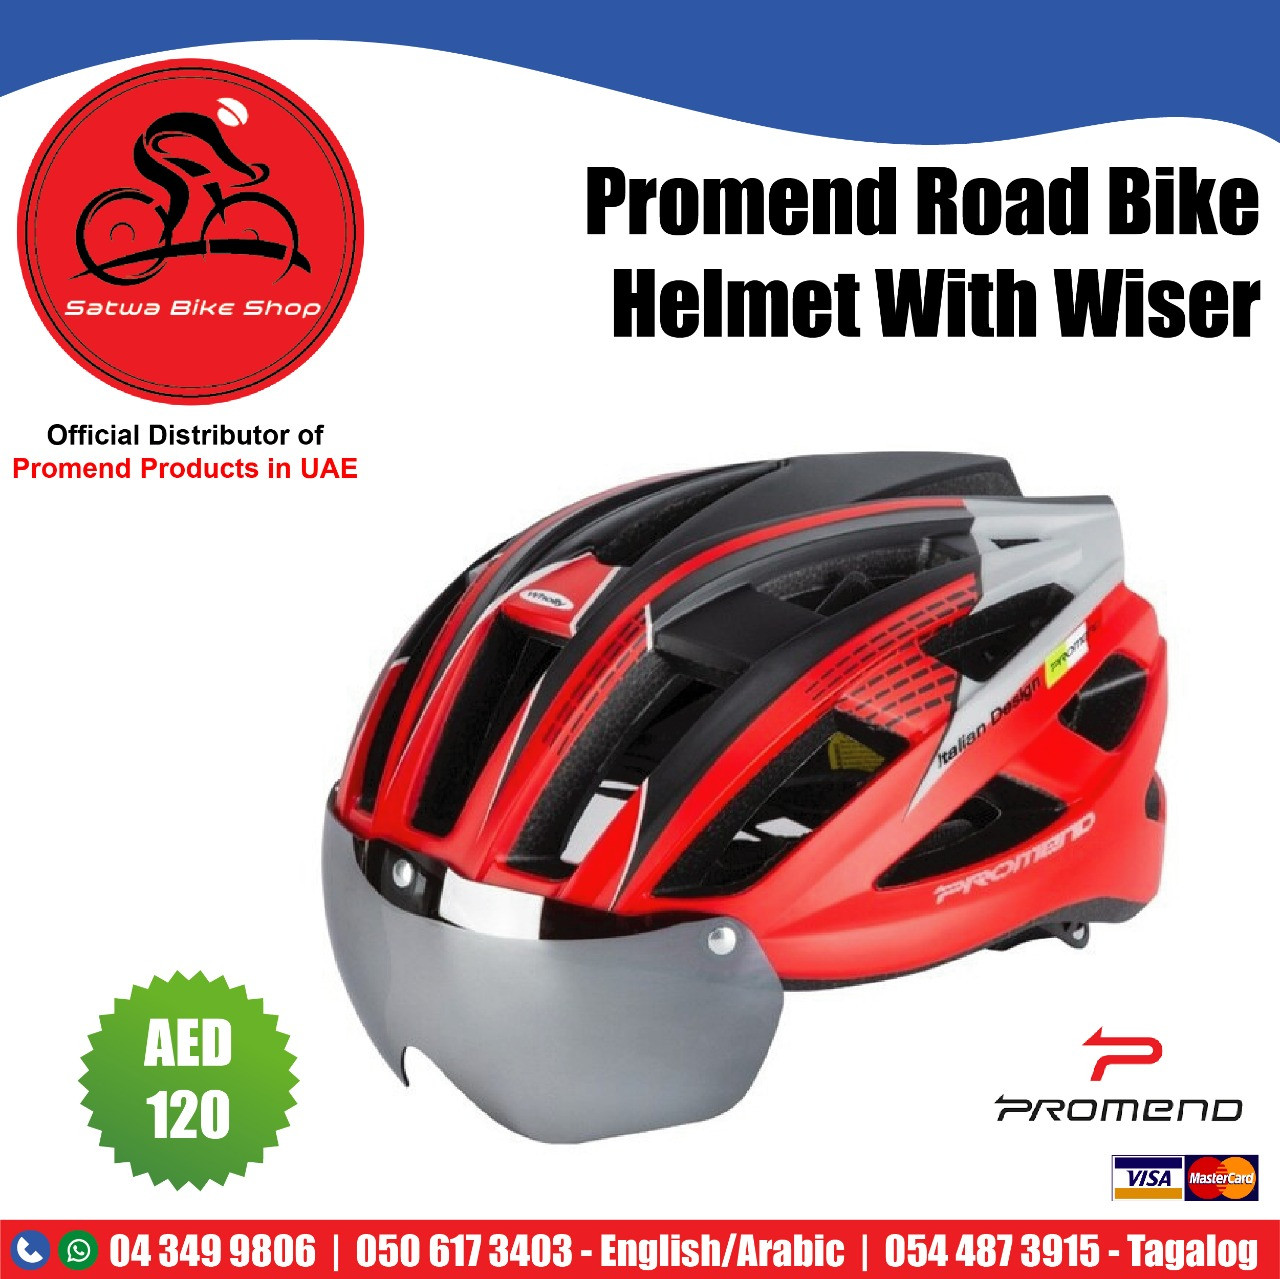 Promend Road Bike Helmet with Wiser